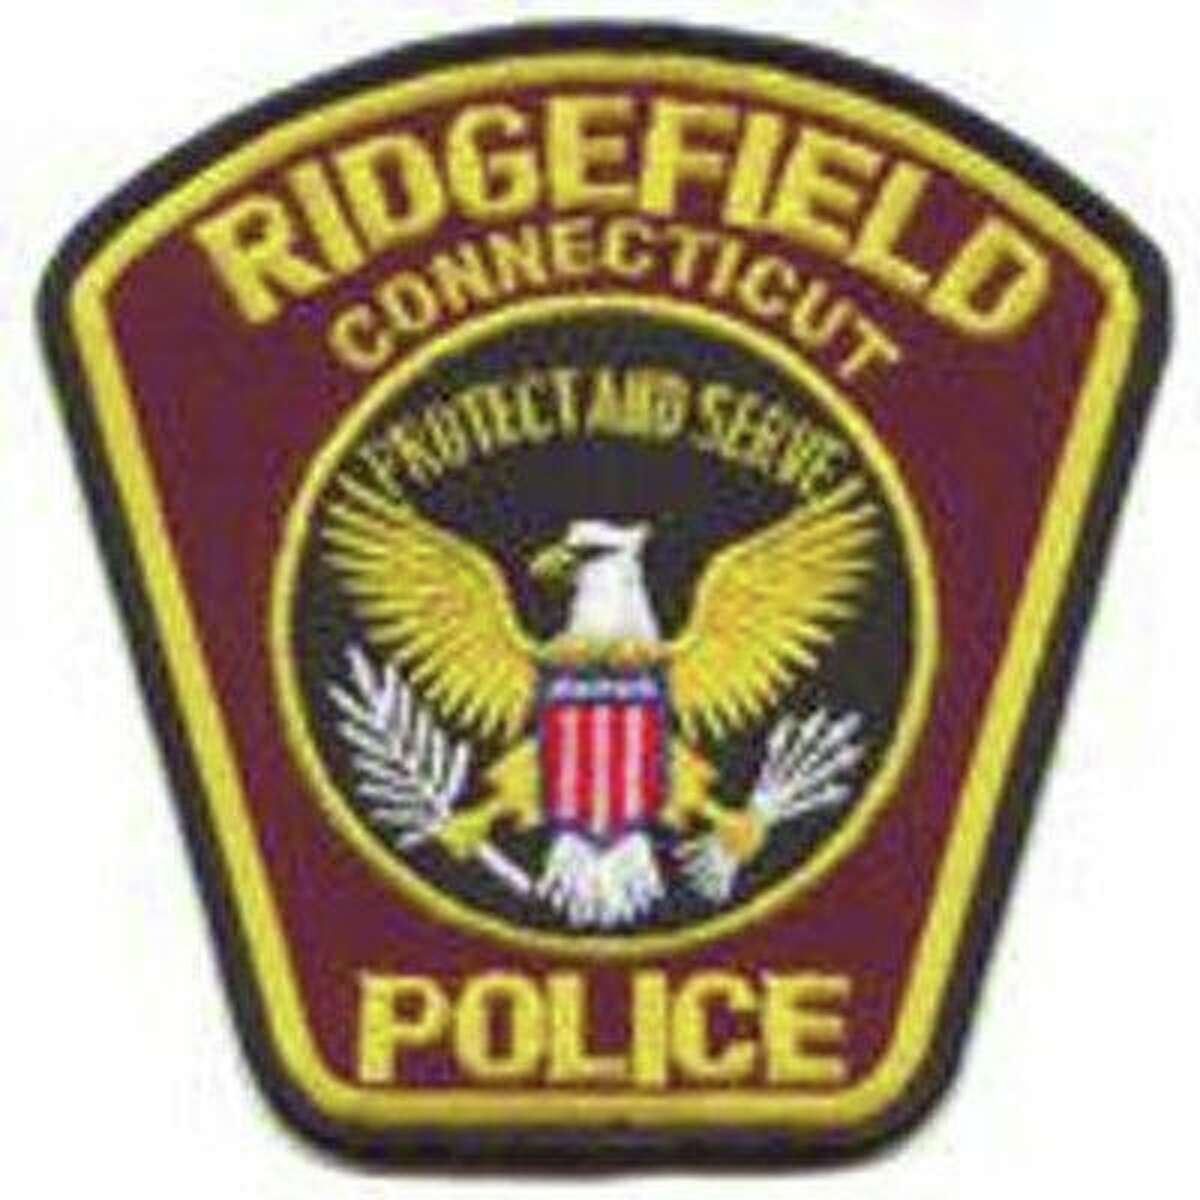 Ridgefield police patch